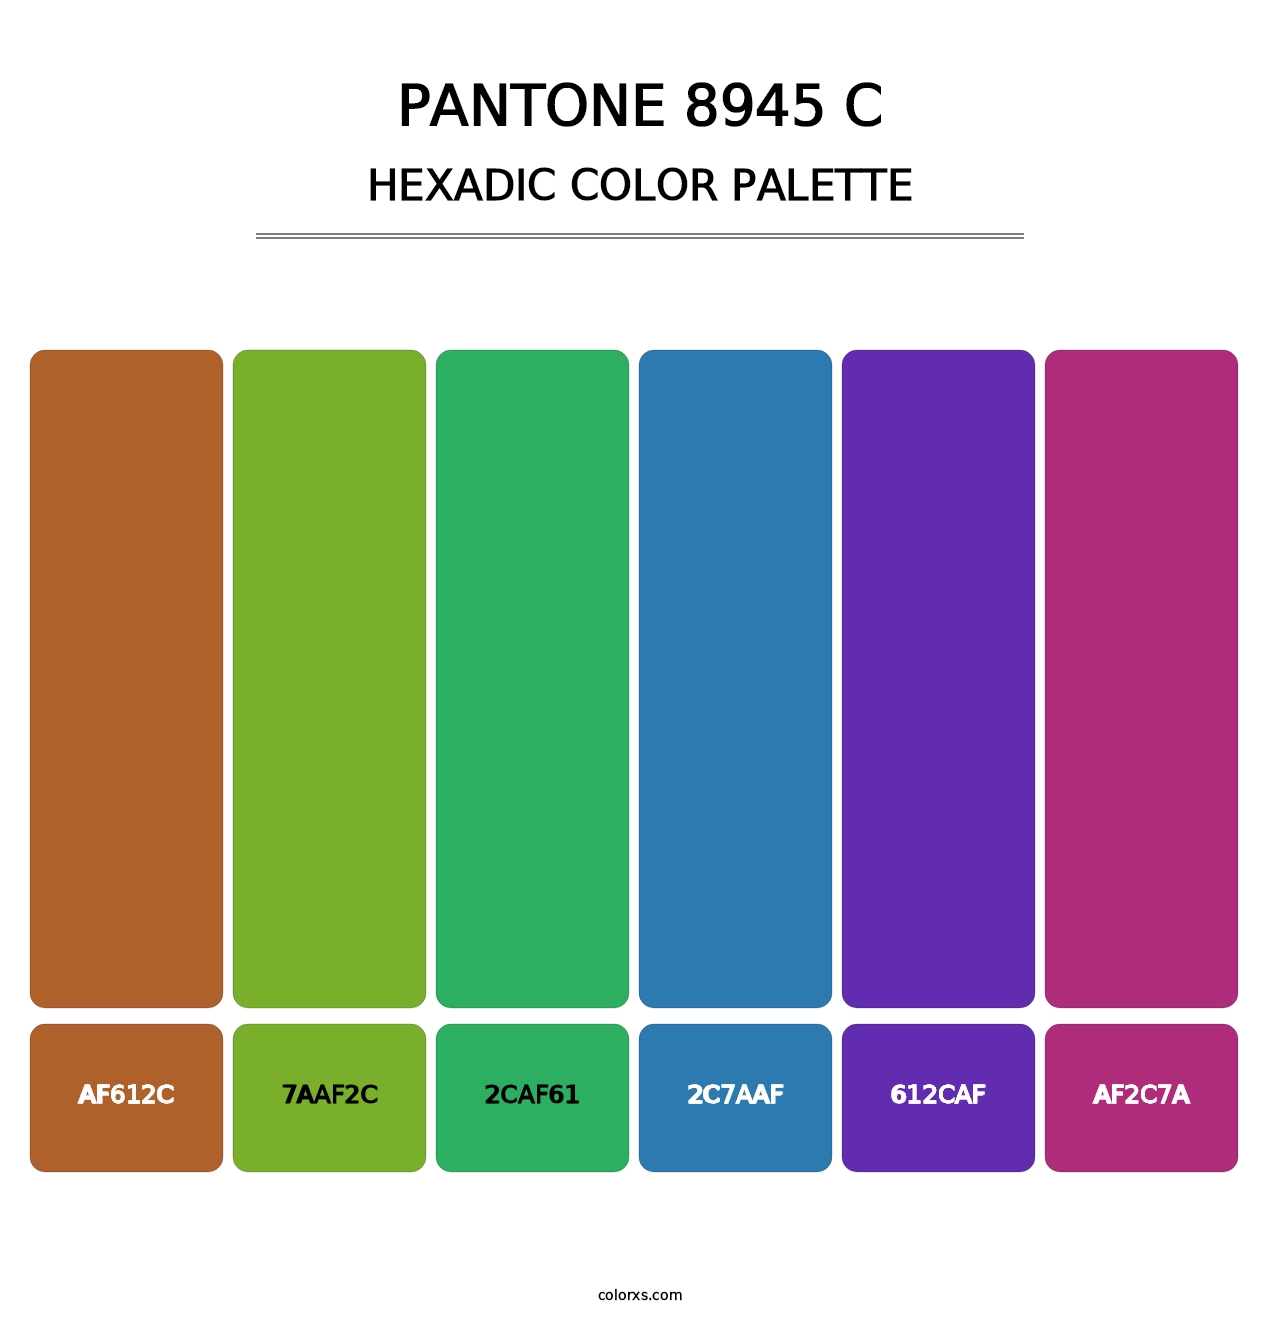 PANTONE 8945 C - Hexadic Color Palette